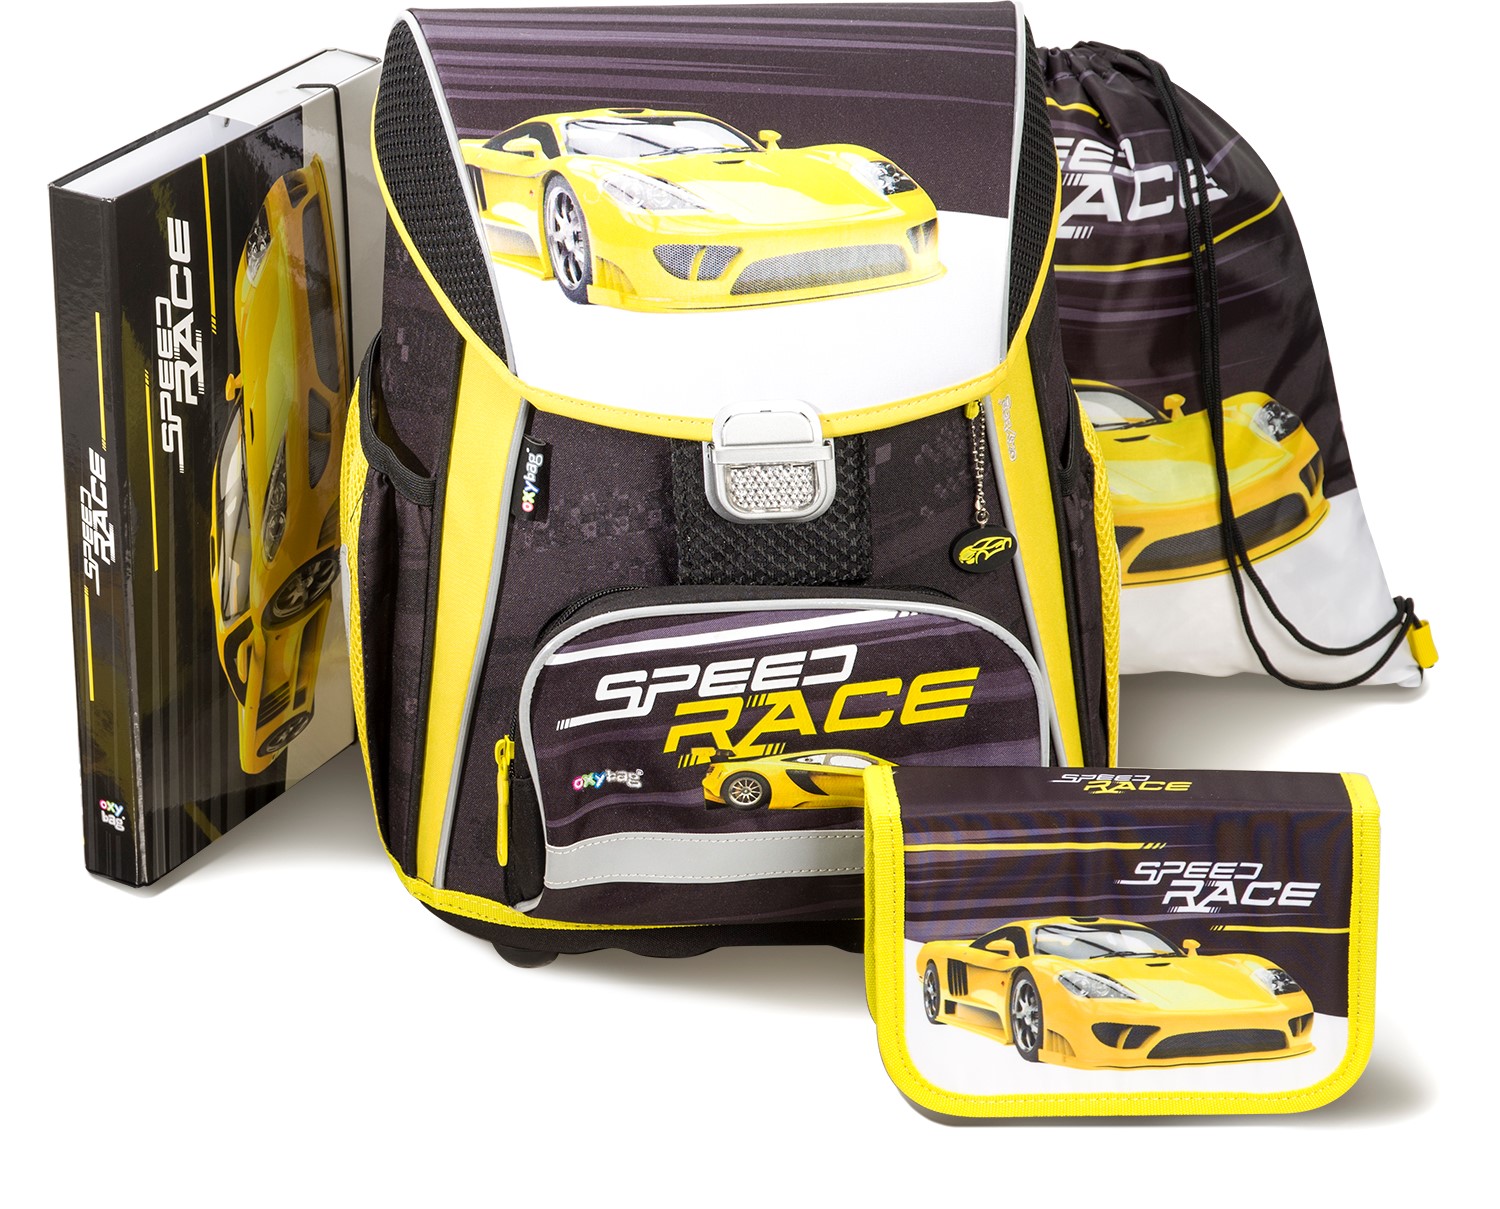 Schultaschen-Set Cool - Racing 4-teilig schwarz/gelb